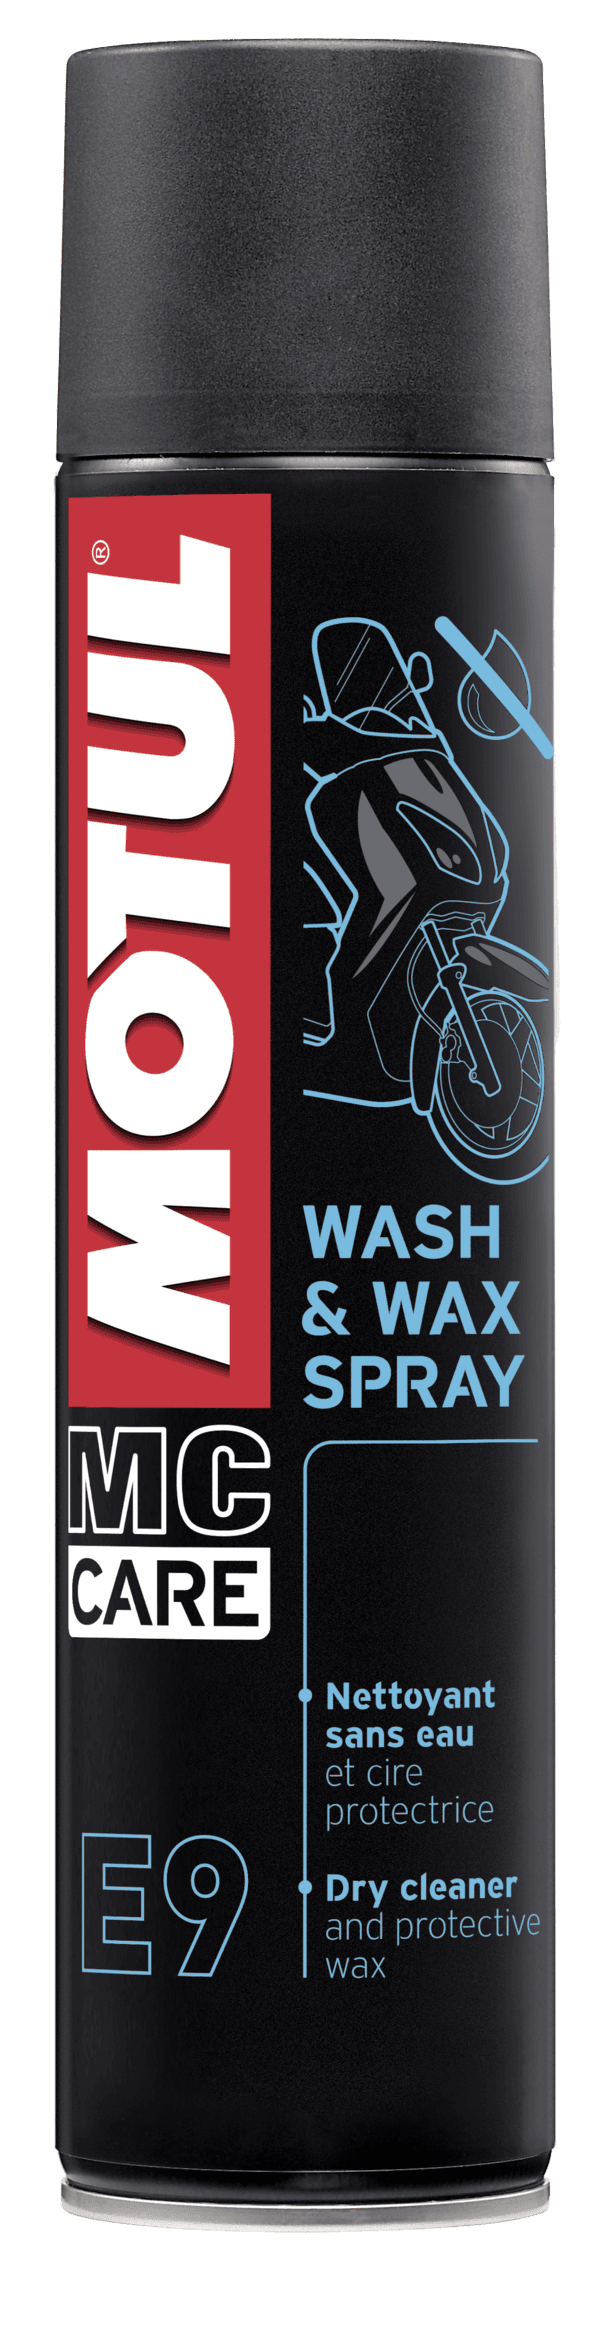 MOTUL MC CARE E9 WASH & WAX SPRAY